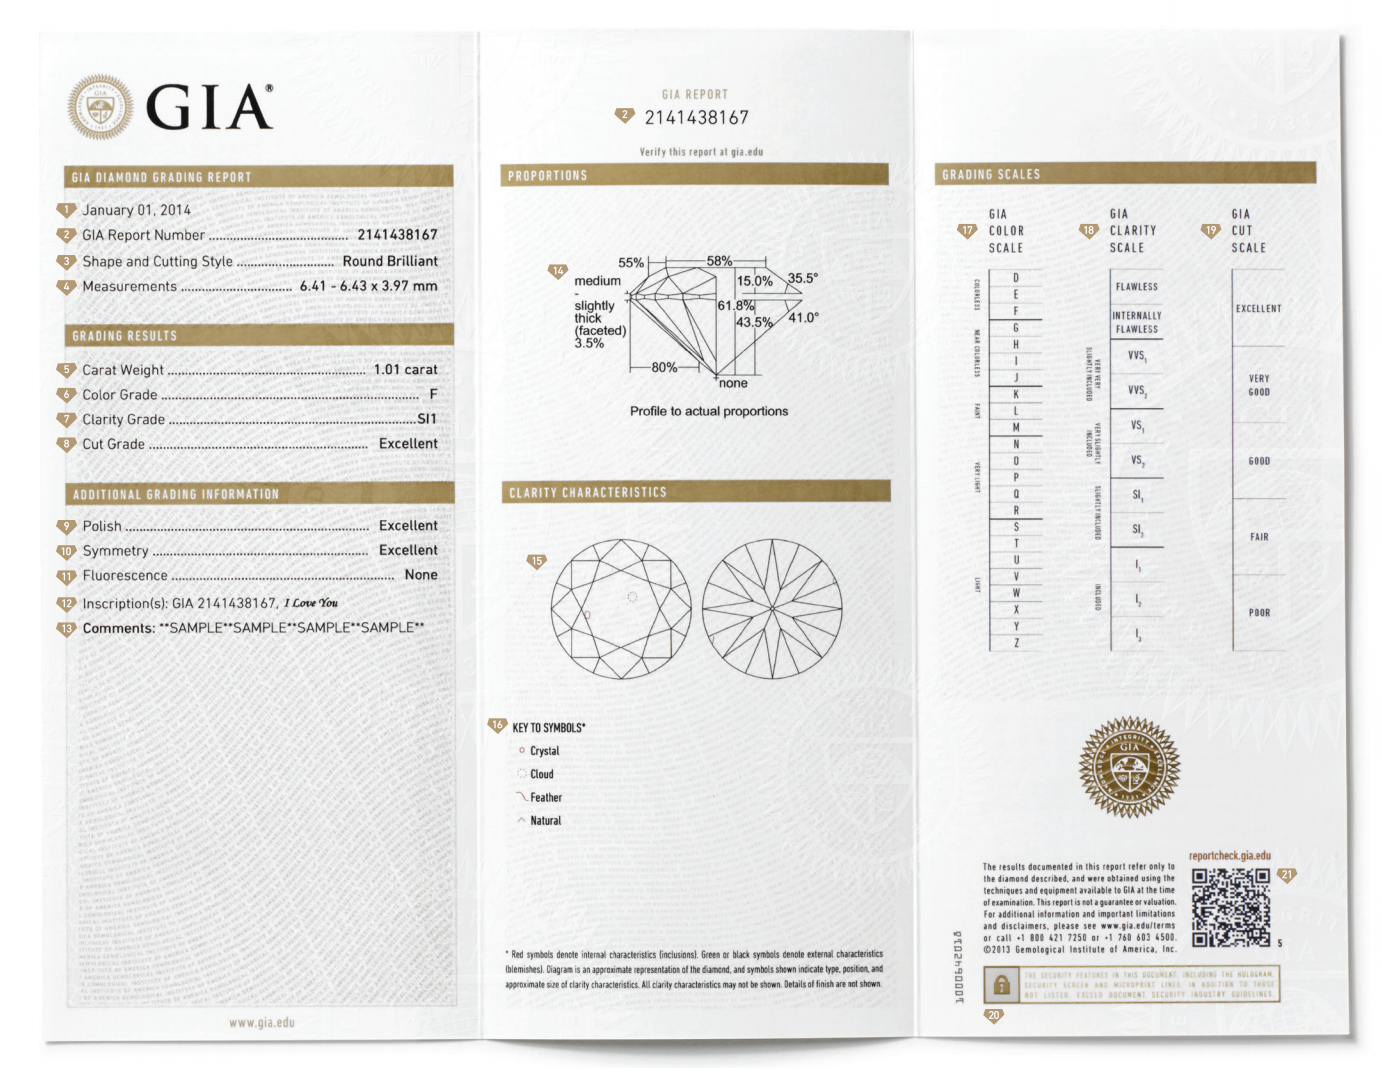 Sample GIA Certificate 